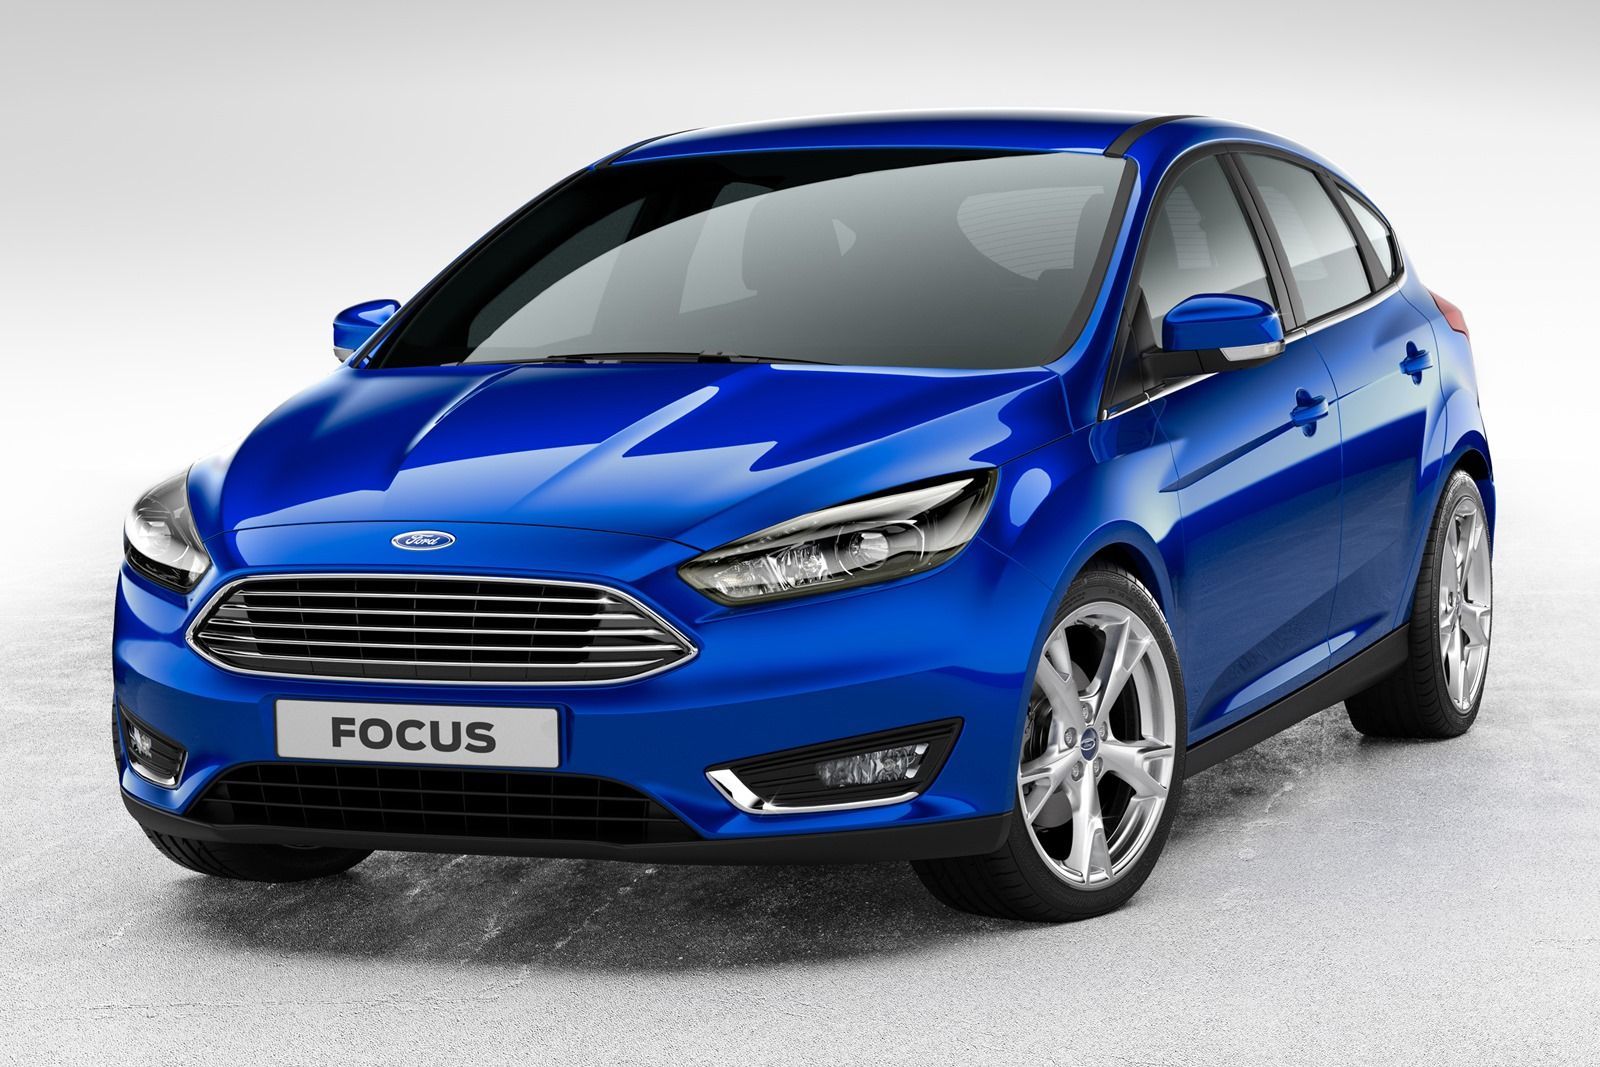 Ford Focus 2015 facelift